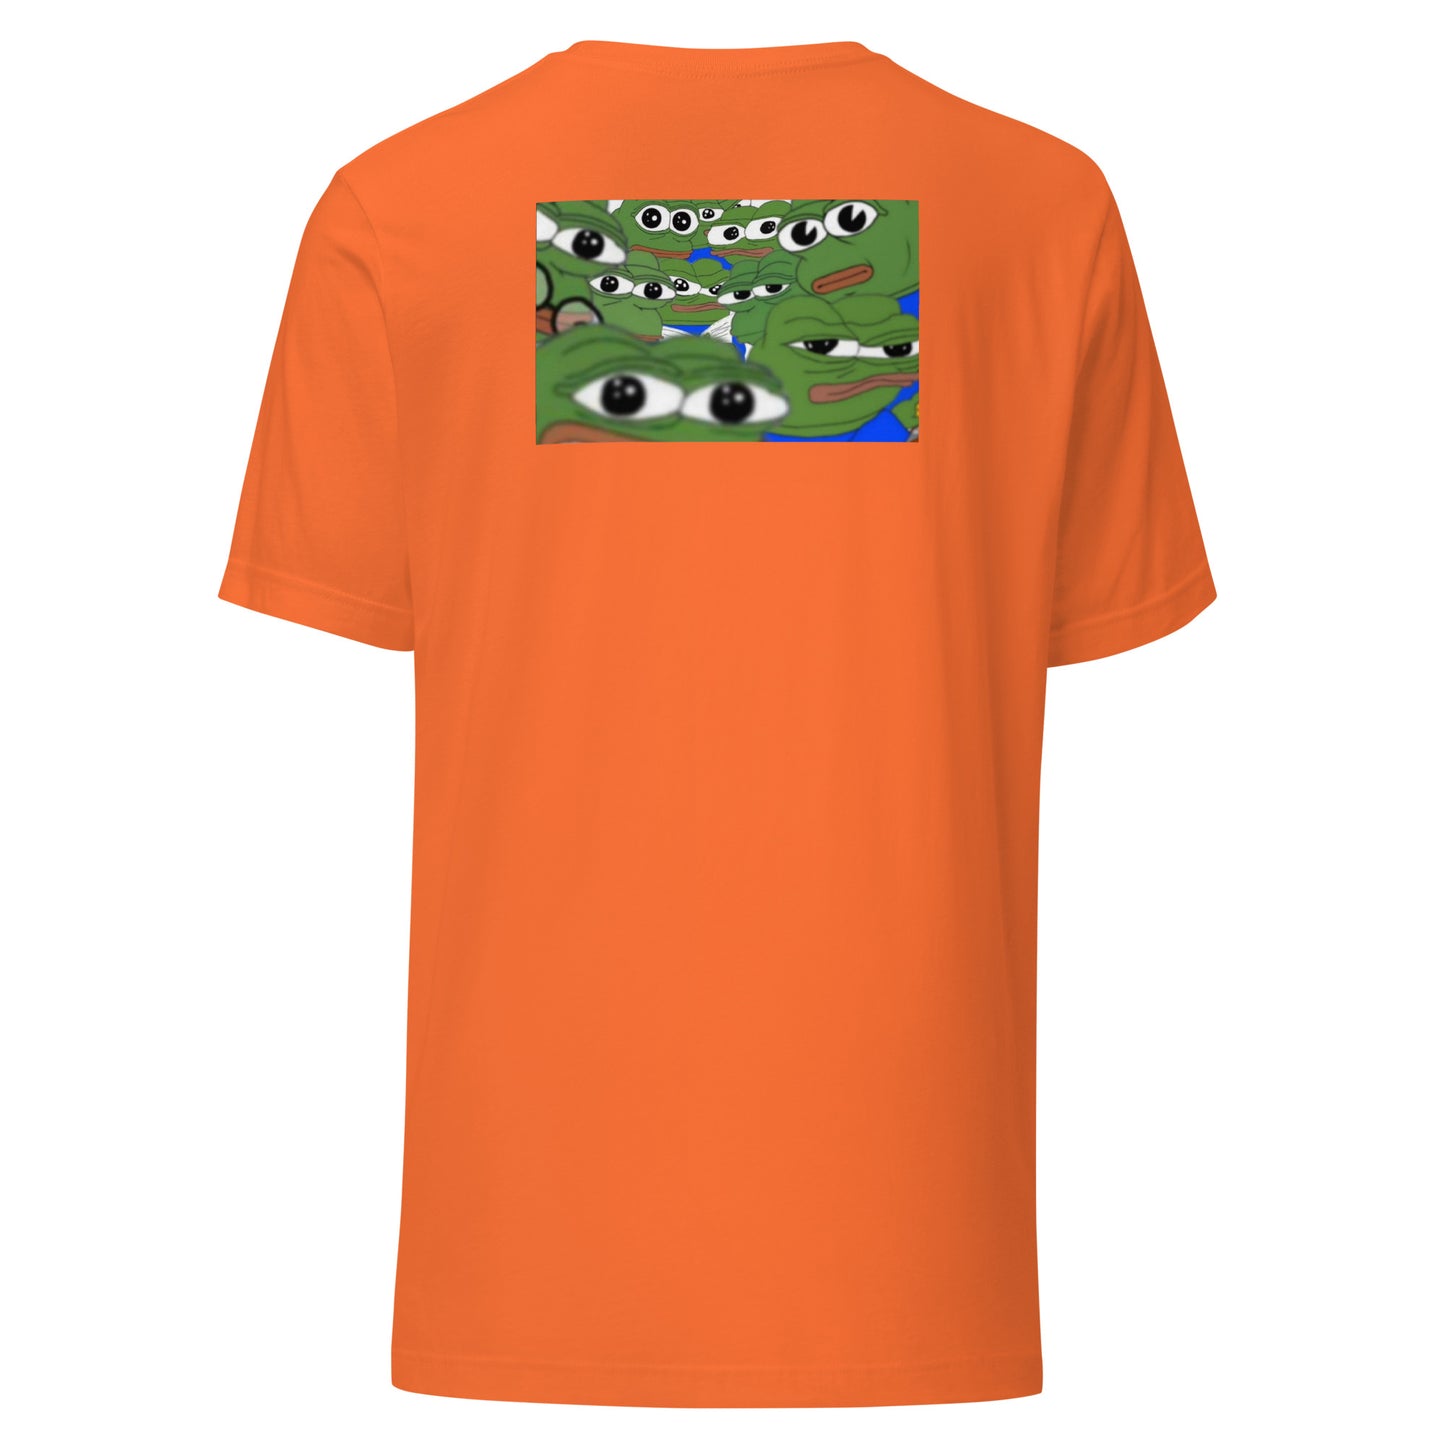 Pepe Army t-shirt